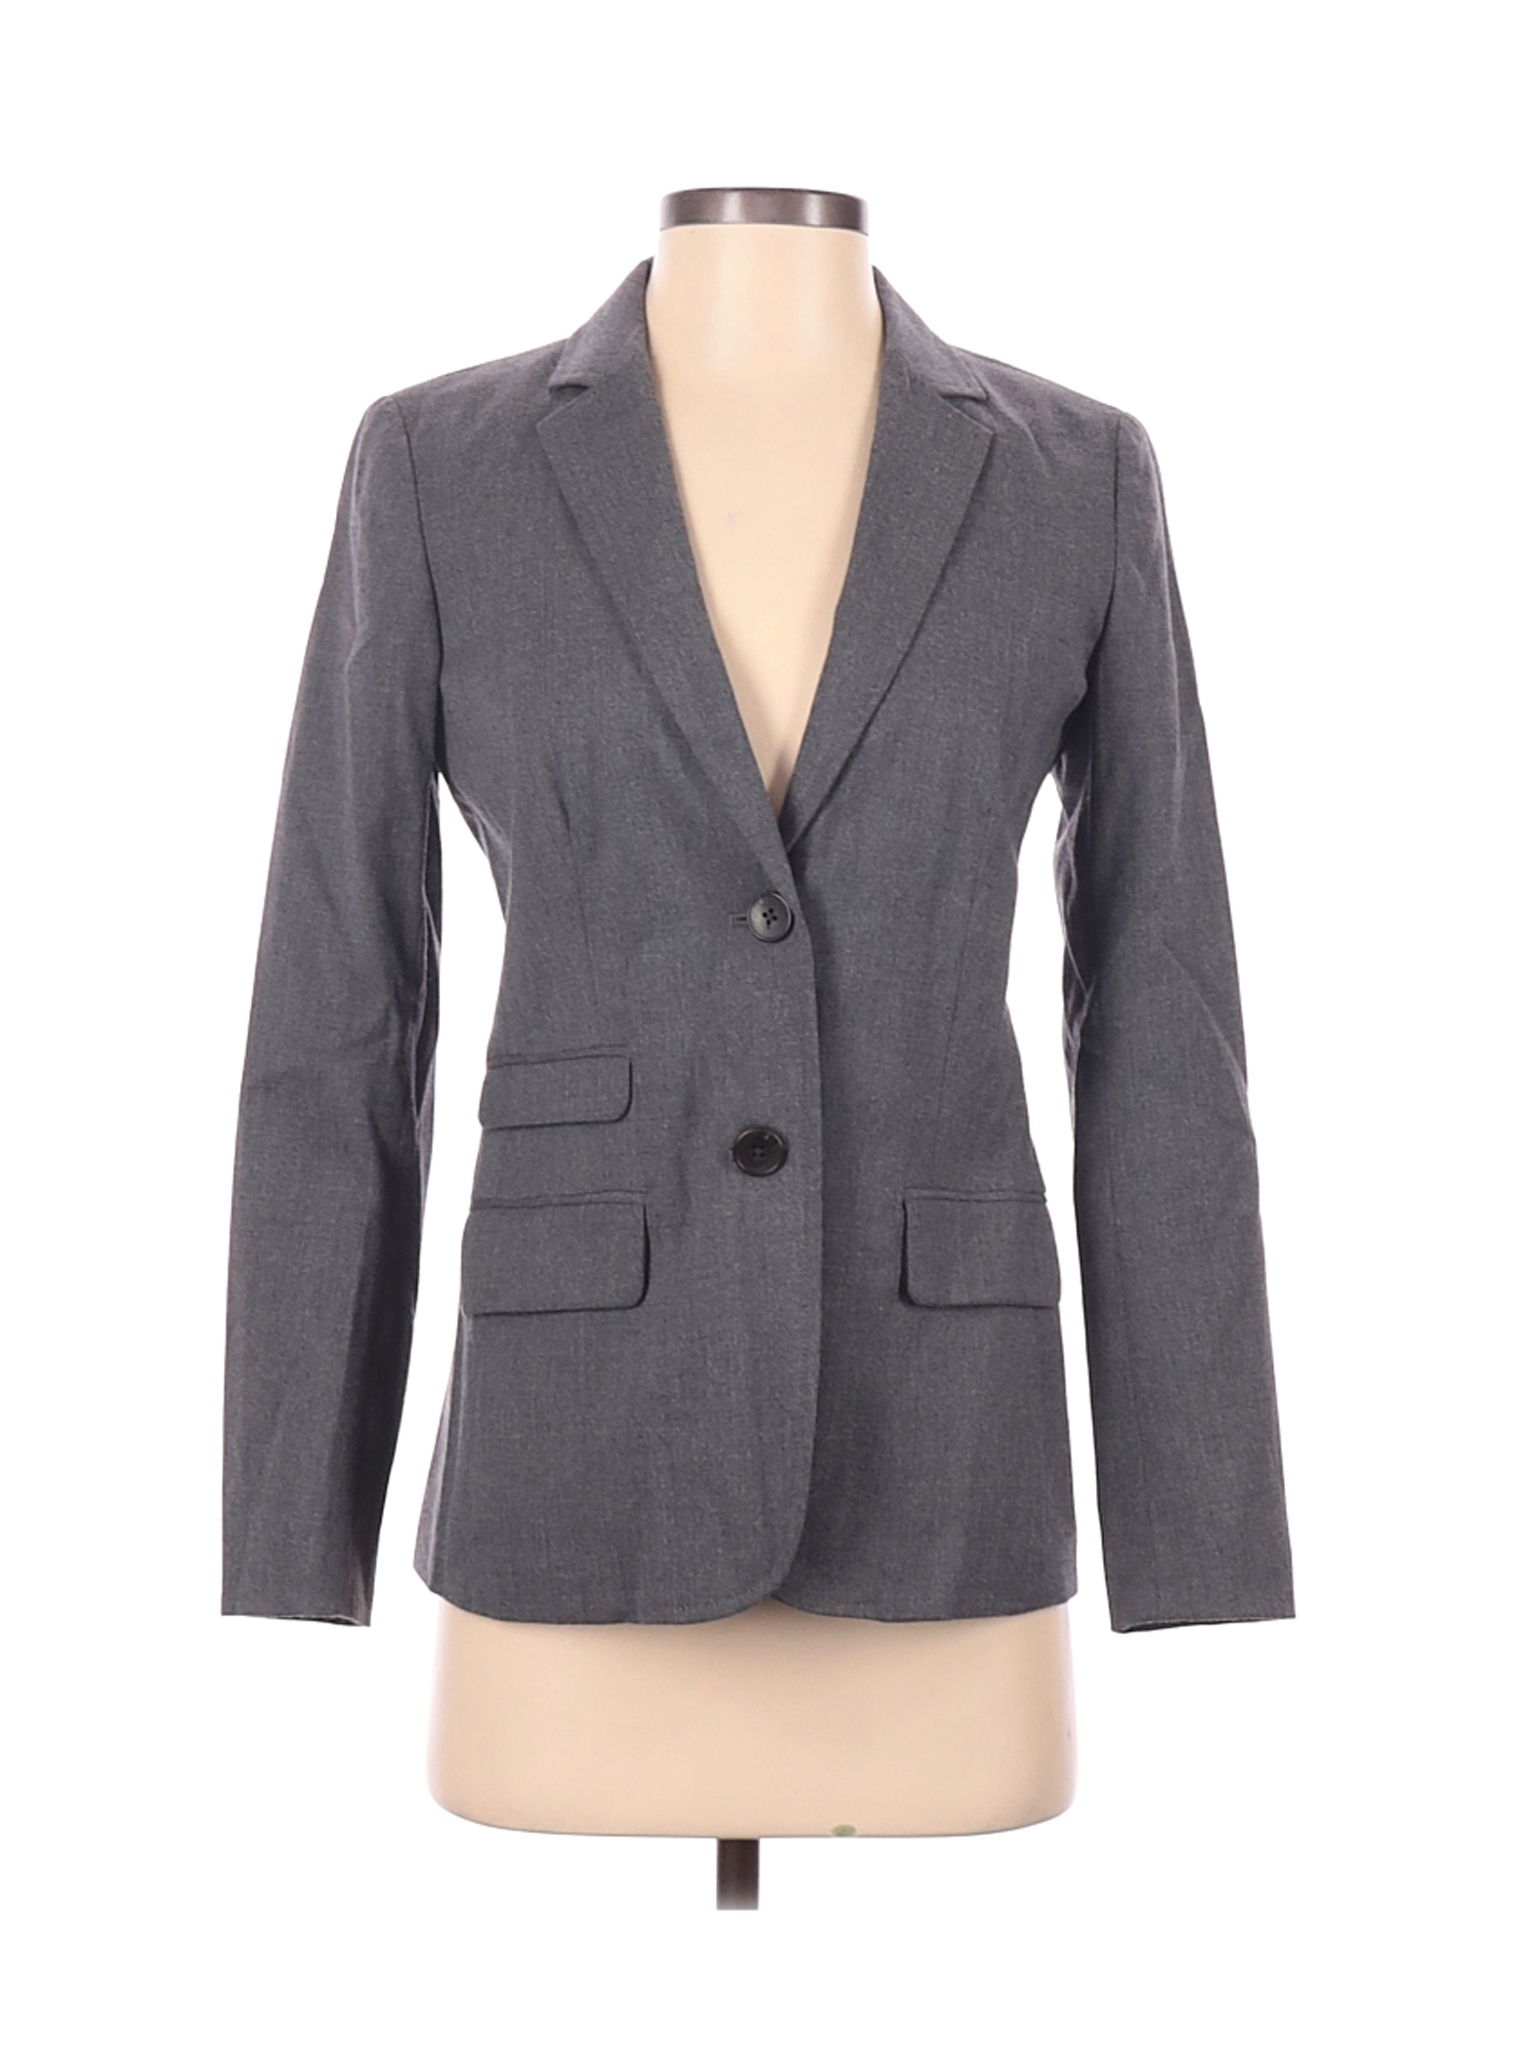 Gap Women Gray Wool Blazer 2 | eBay